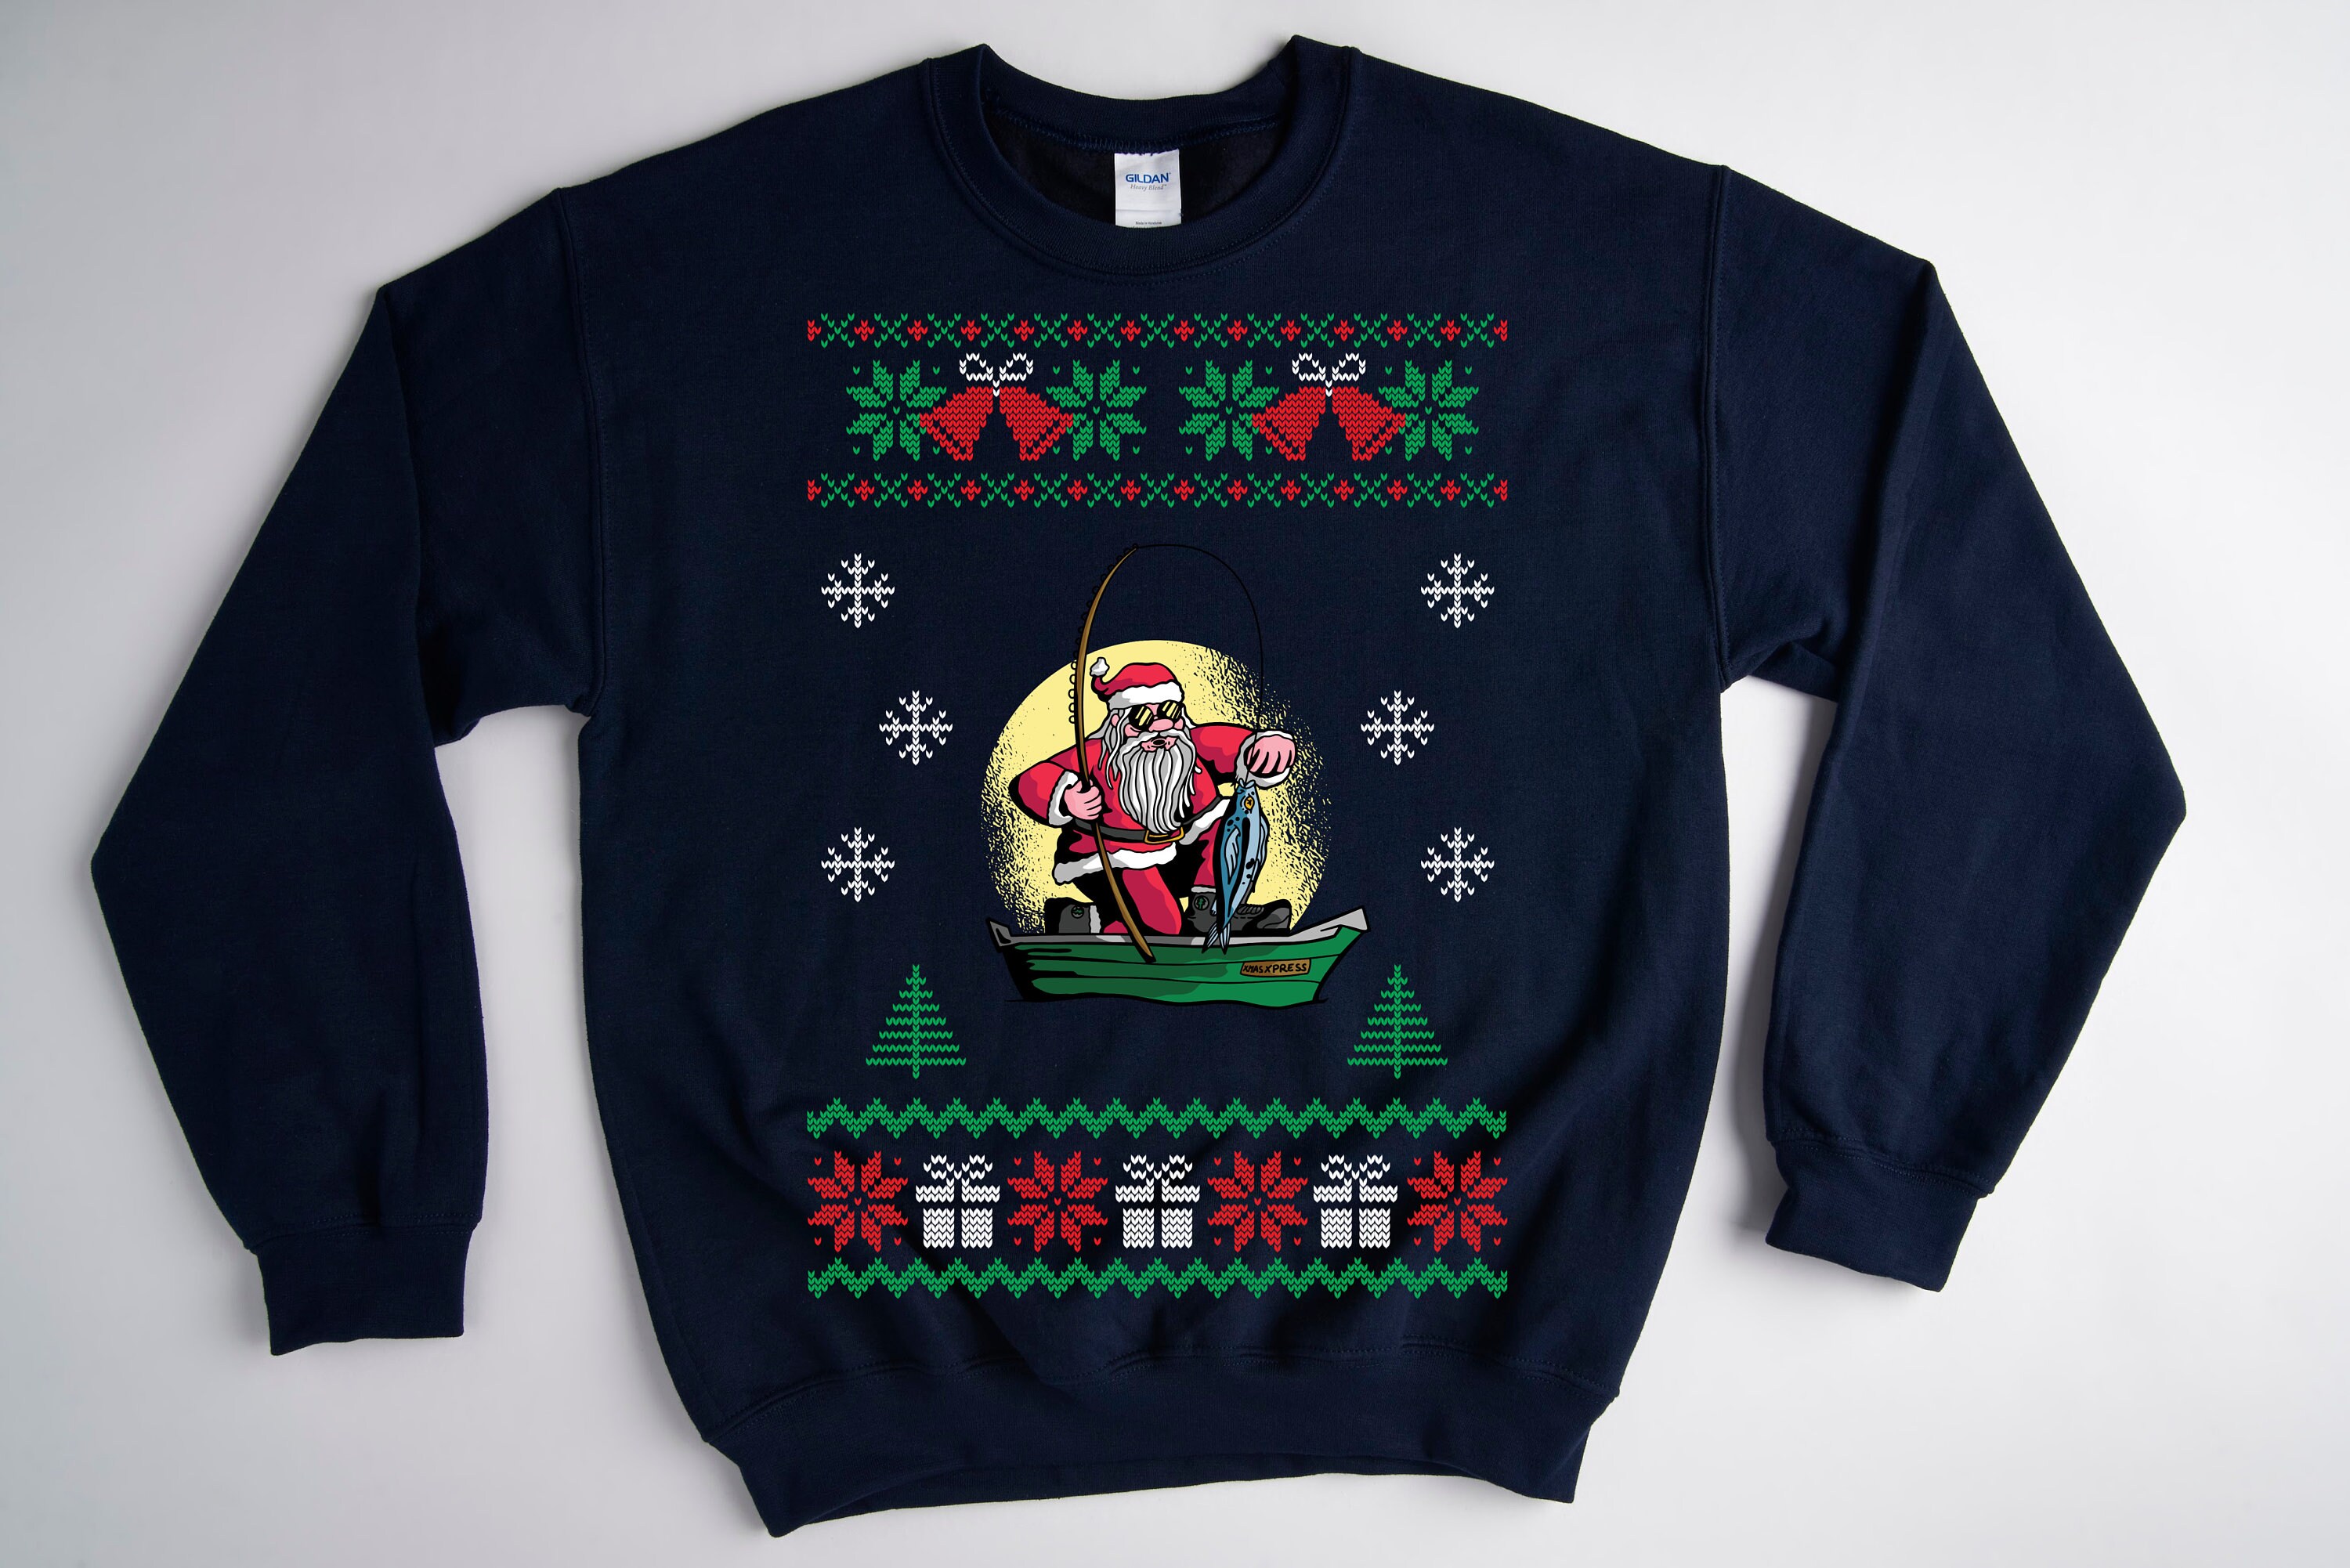 Santa Fishing Funny Ugly Christmas Sweater - Funny Ugly Christmas Sweater